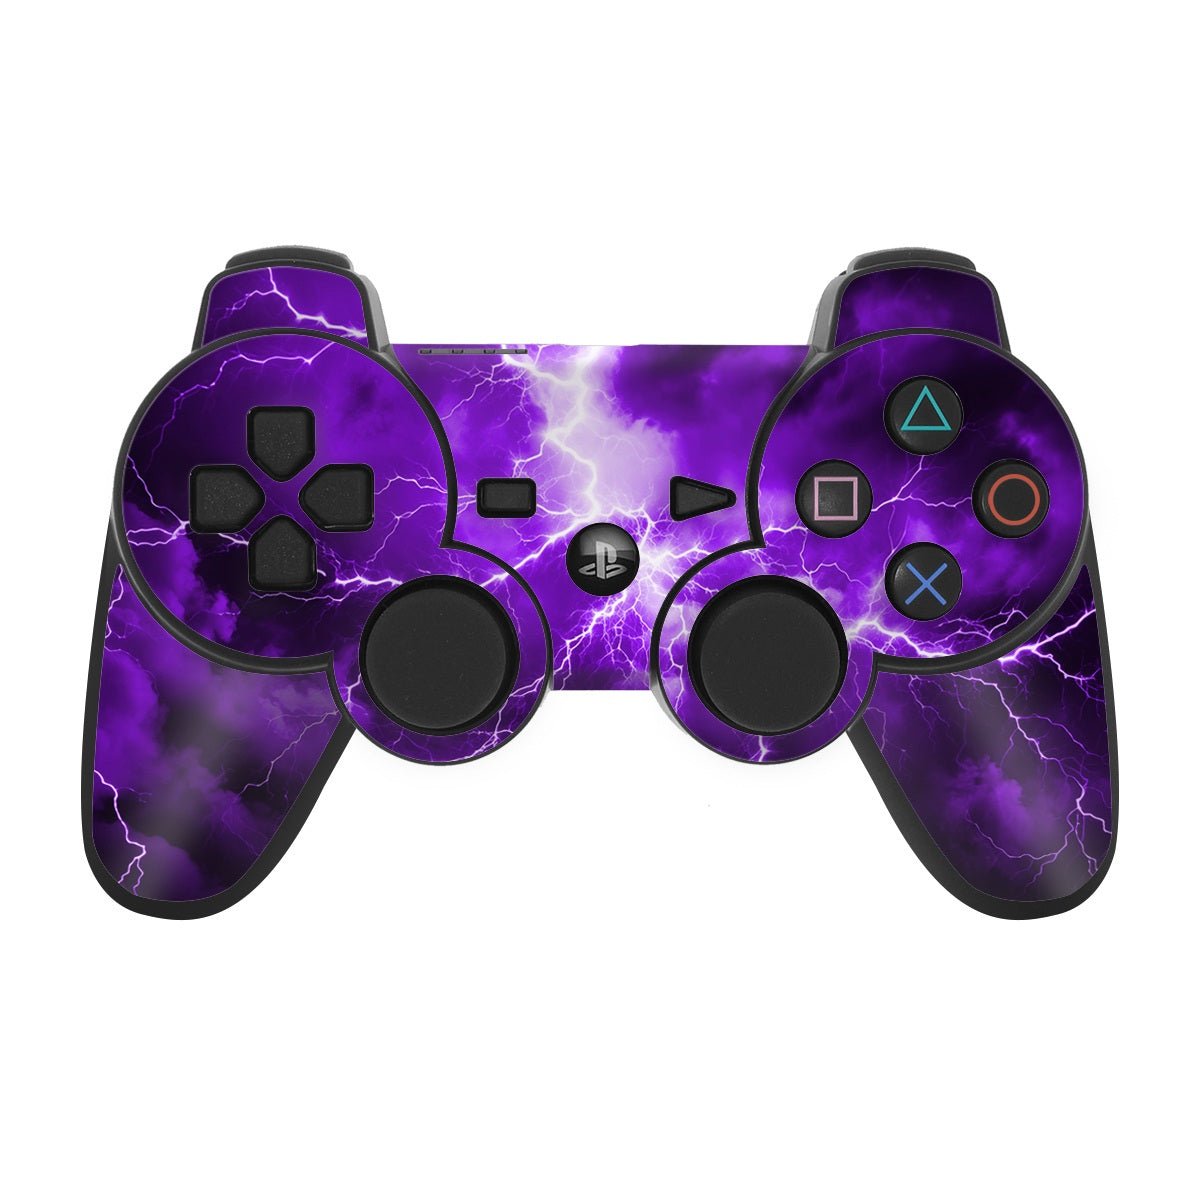 Apocalypse Purple - Sony PS3 Controller Skin - Gaming - DecalGirl